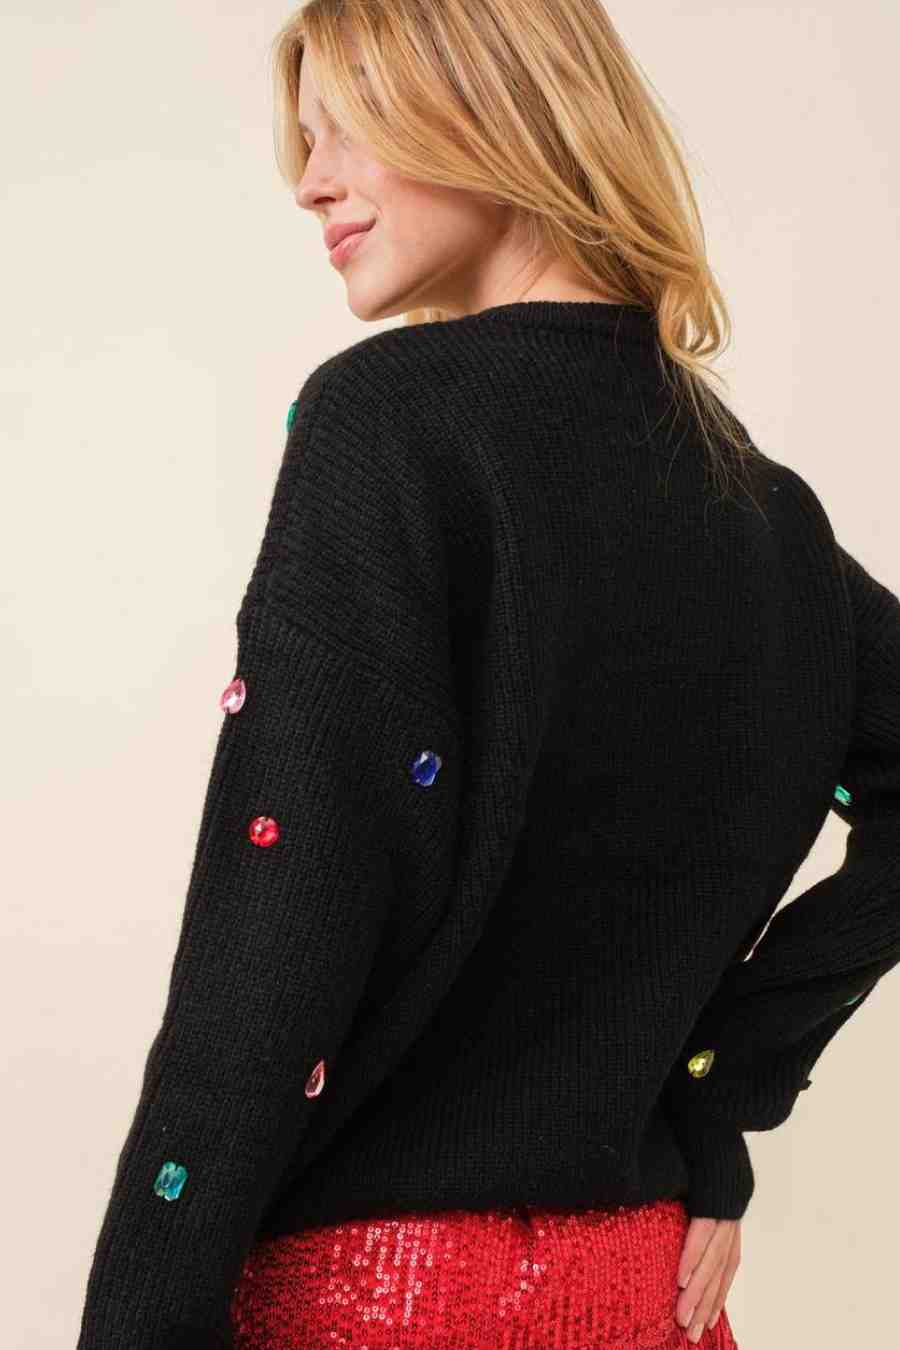 Bejeweled Rhinestone Colorful Sweater